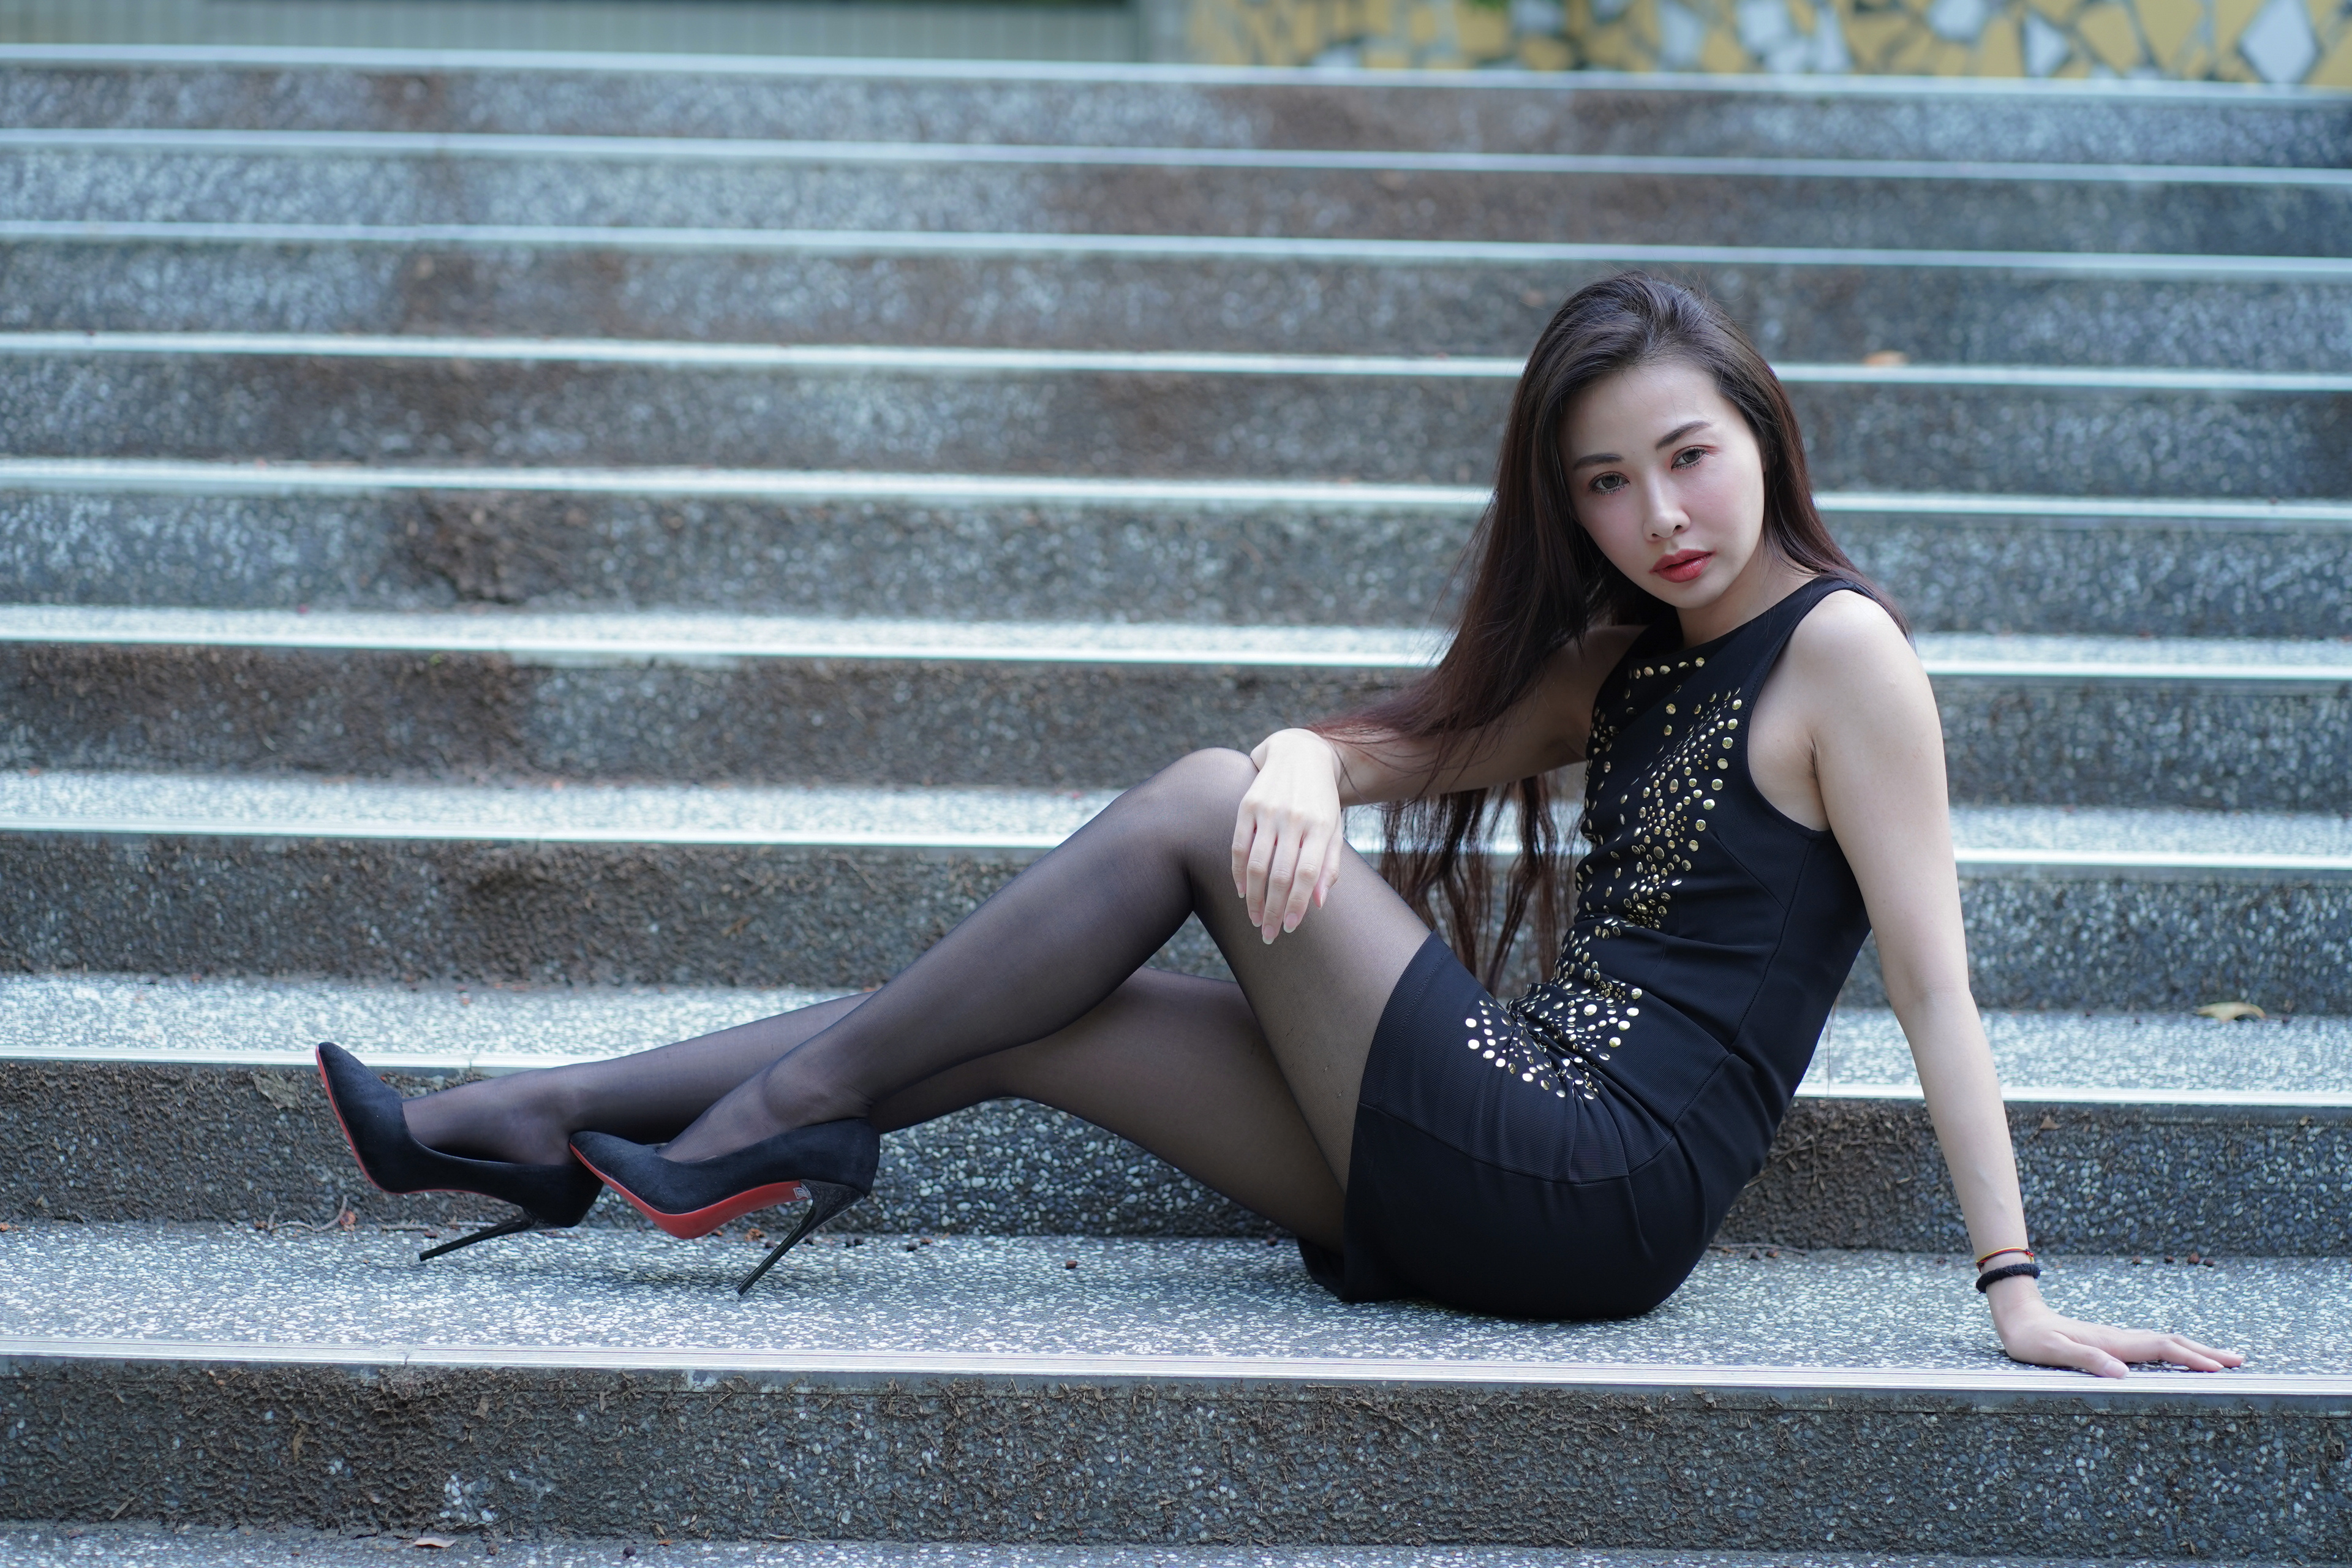 Asian Model Women Long Hair Dark Hair Sitting Women Outdoors Urban Heels Black Heels Legs Black Pant 3840x2560